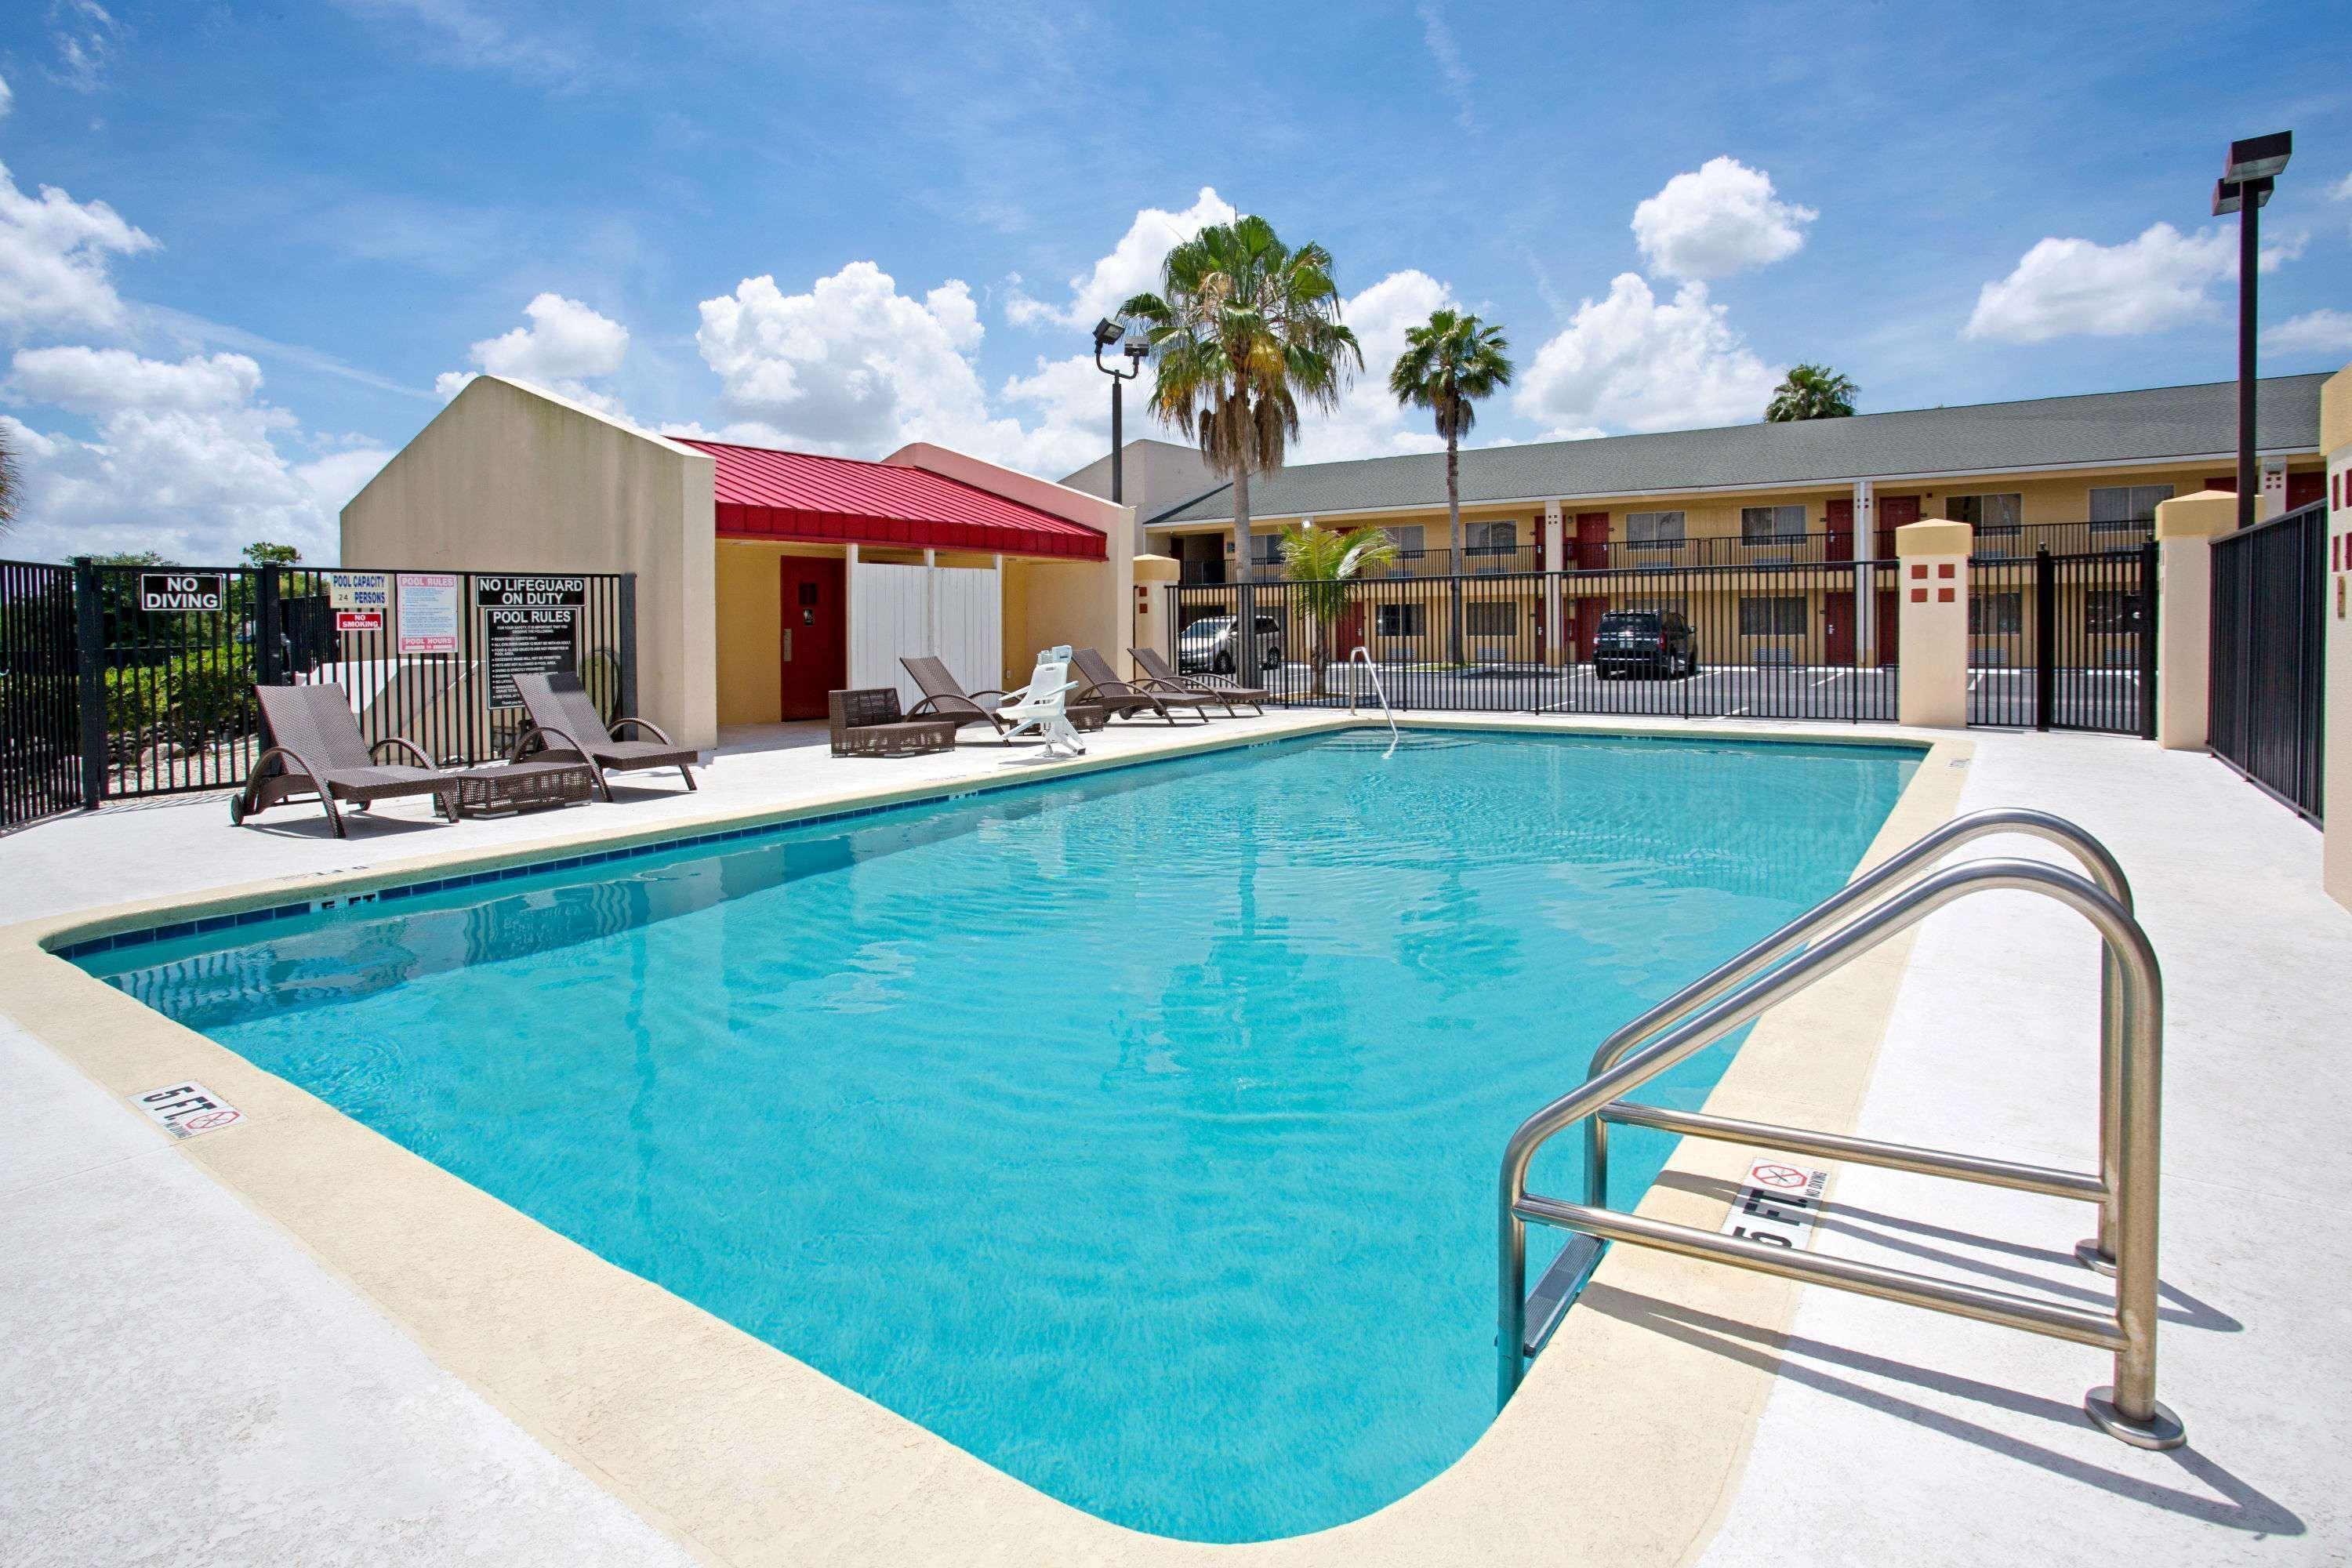 Hotels Near Ihop(International Drive) In Orlando - 2023 Hotels